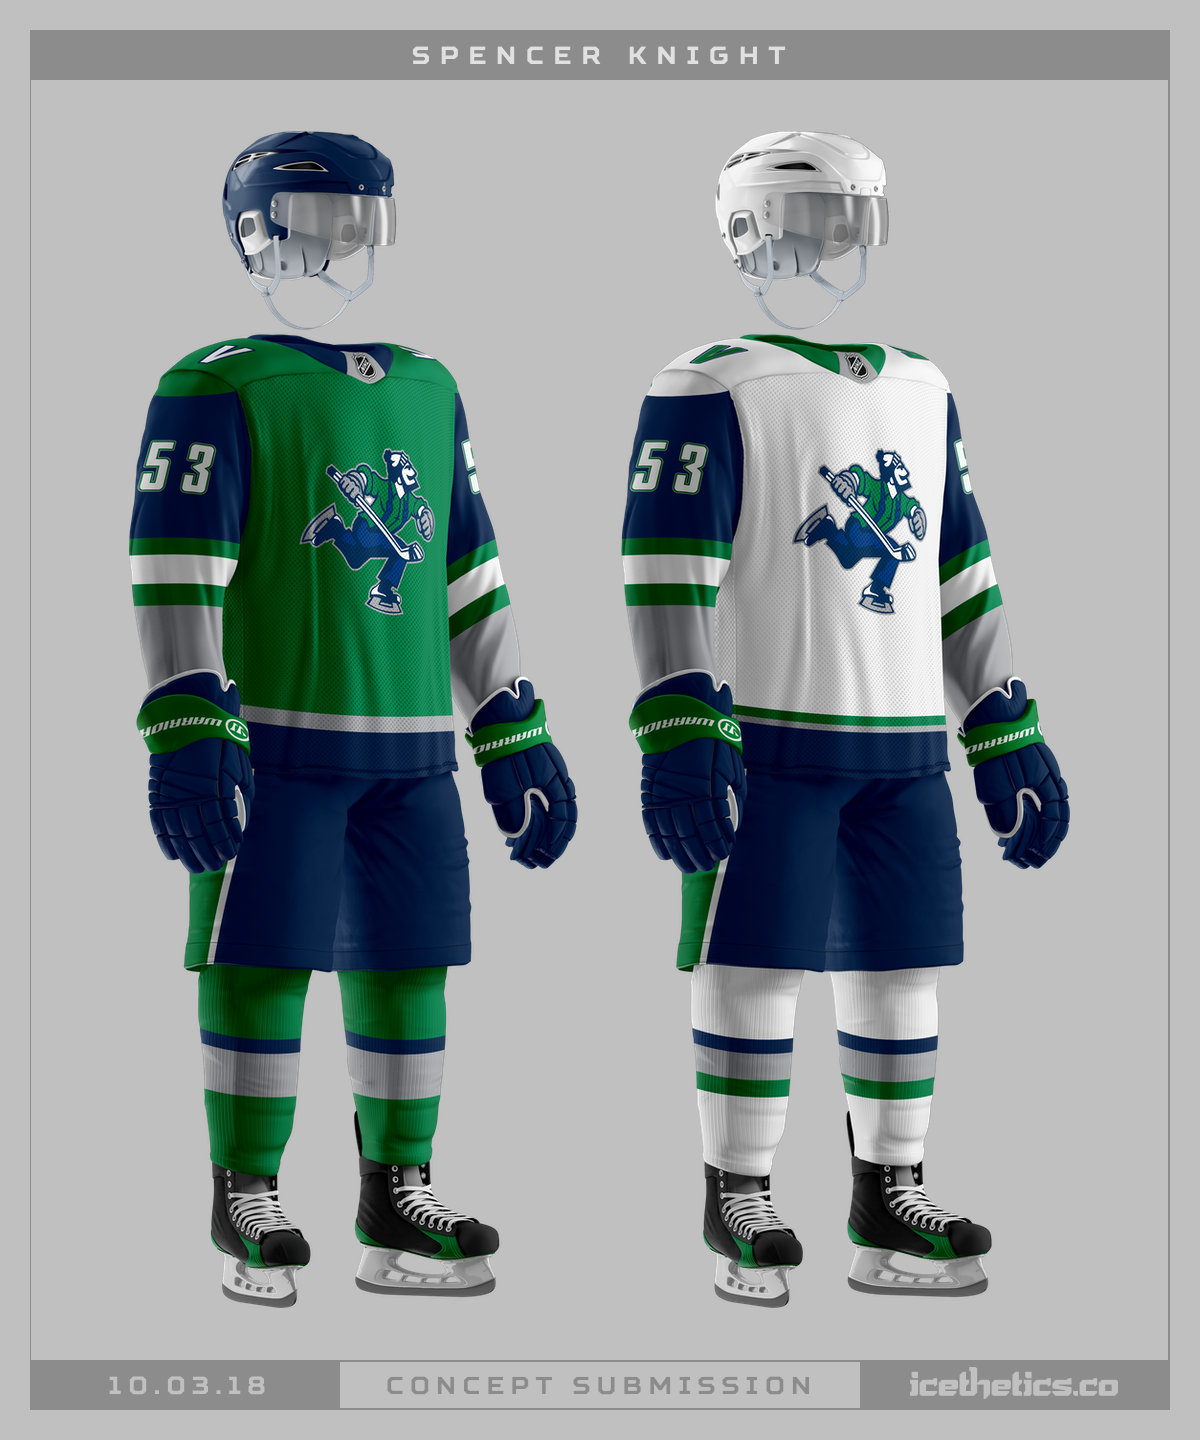 Vancouver Canucks - Uniform / Jersey Concepts - canucks post - Imgur